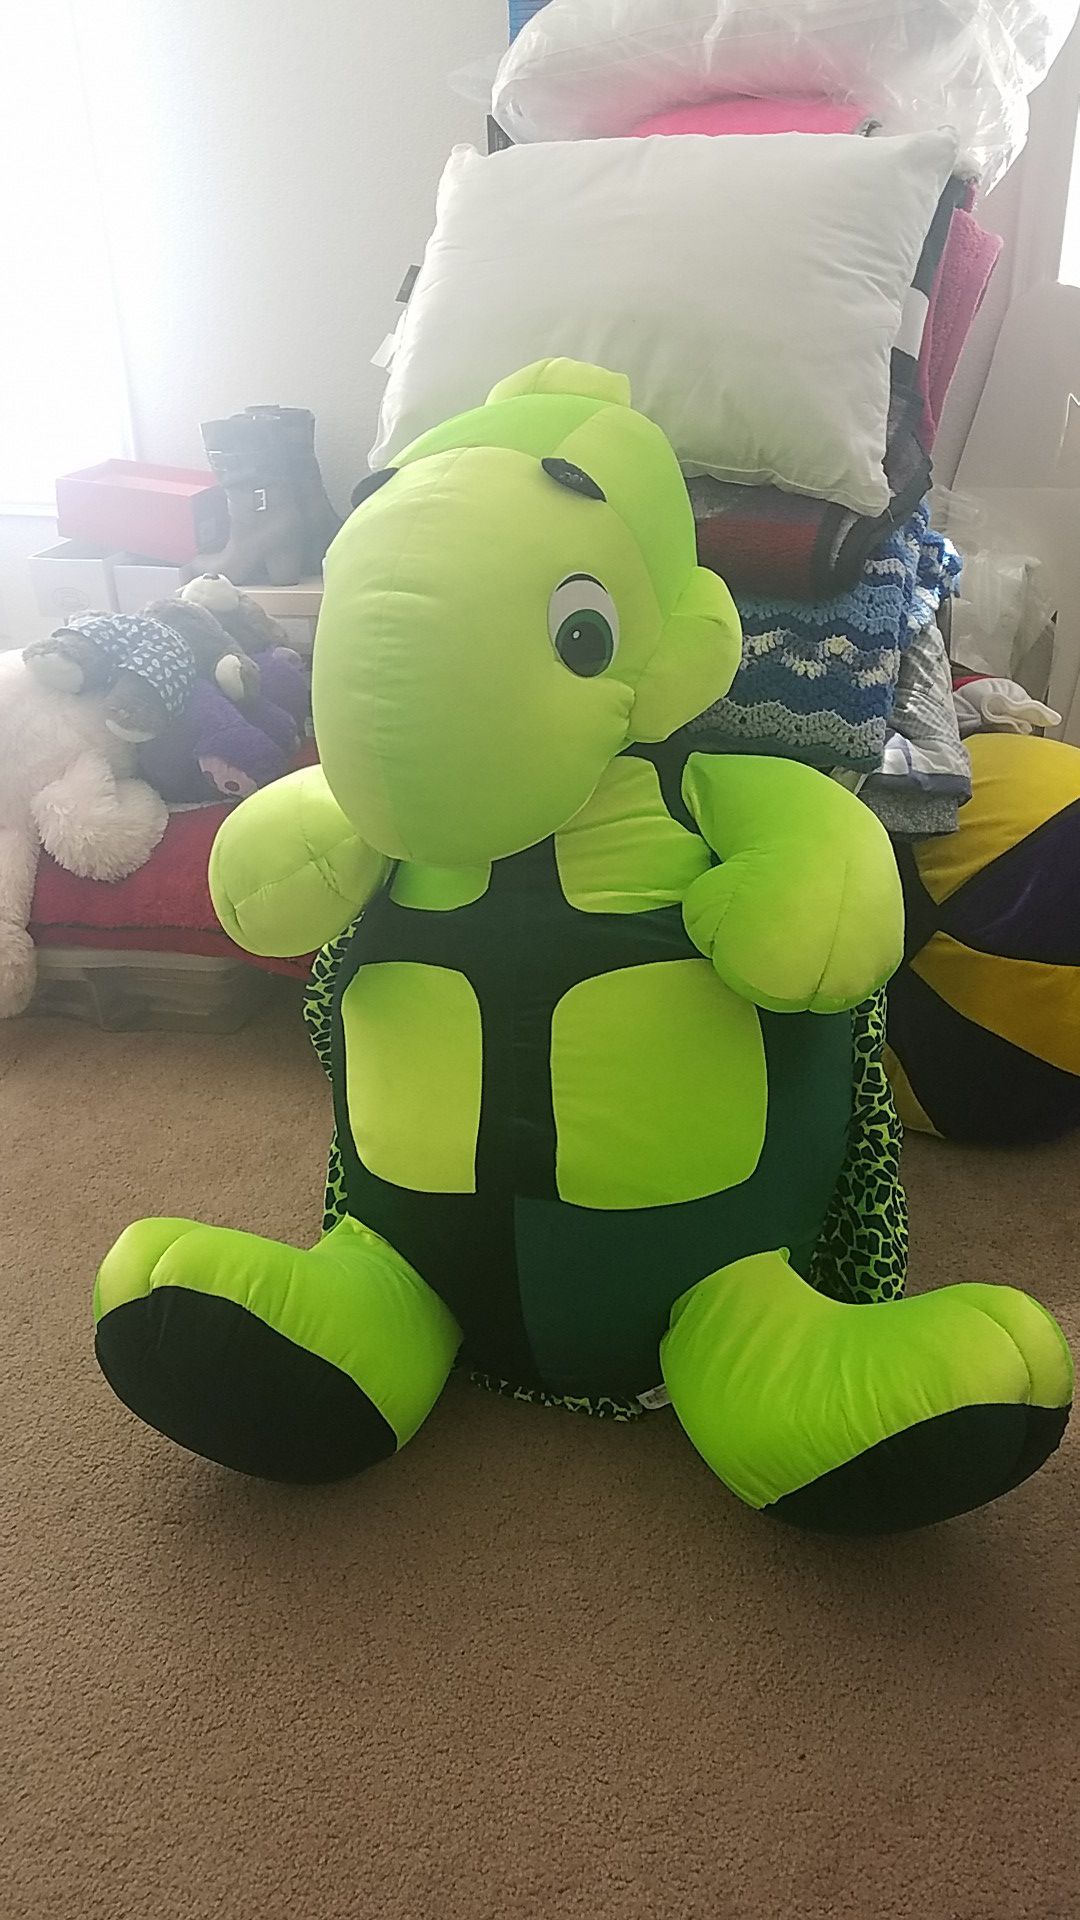 Turtle stuffed animal-huge